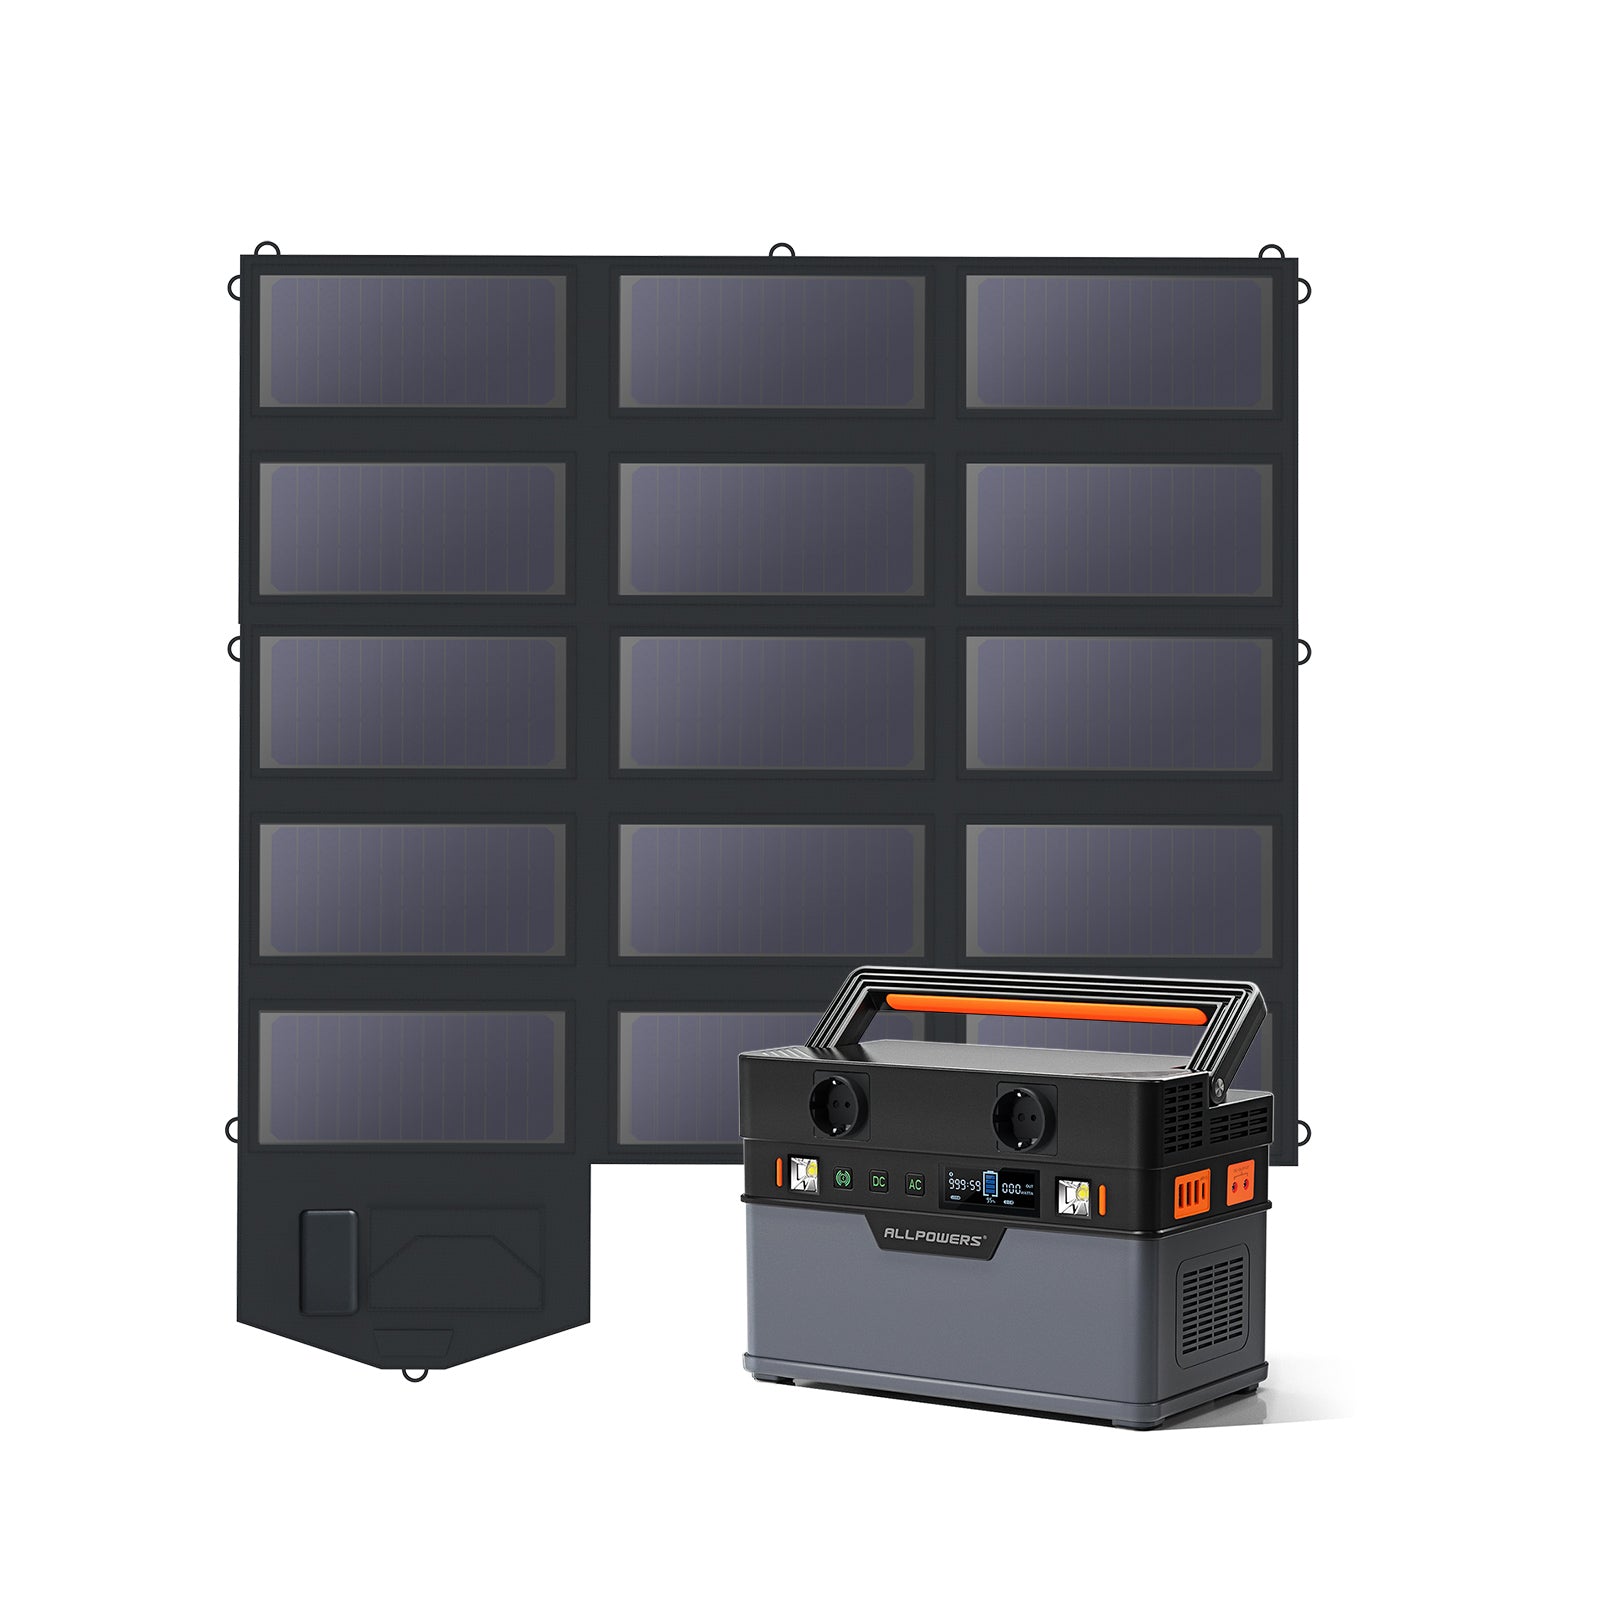 ALLPOWERS Solar Generator Kit 700W (S700 + SP012 100W Solar Panel with Monocrystalline Cell) 